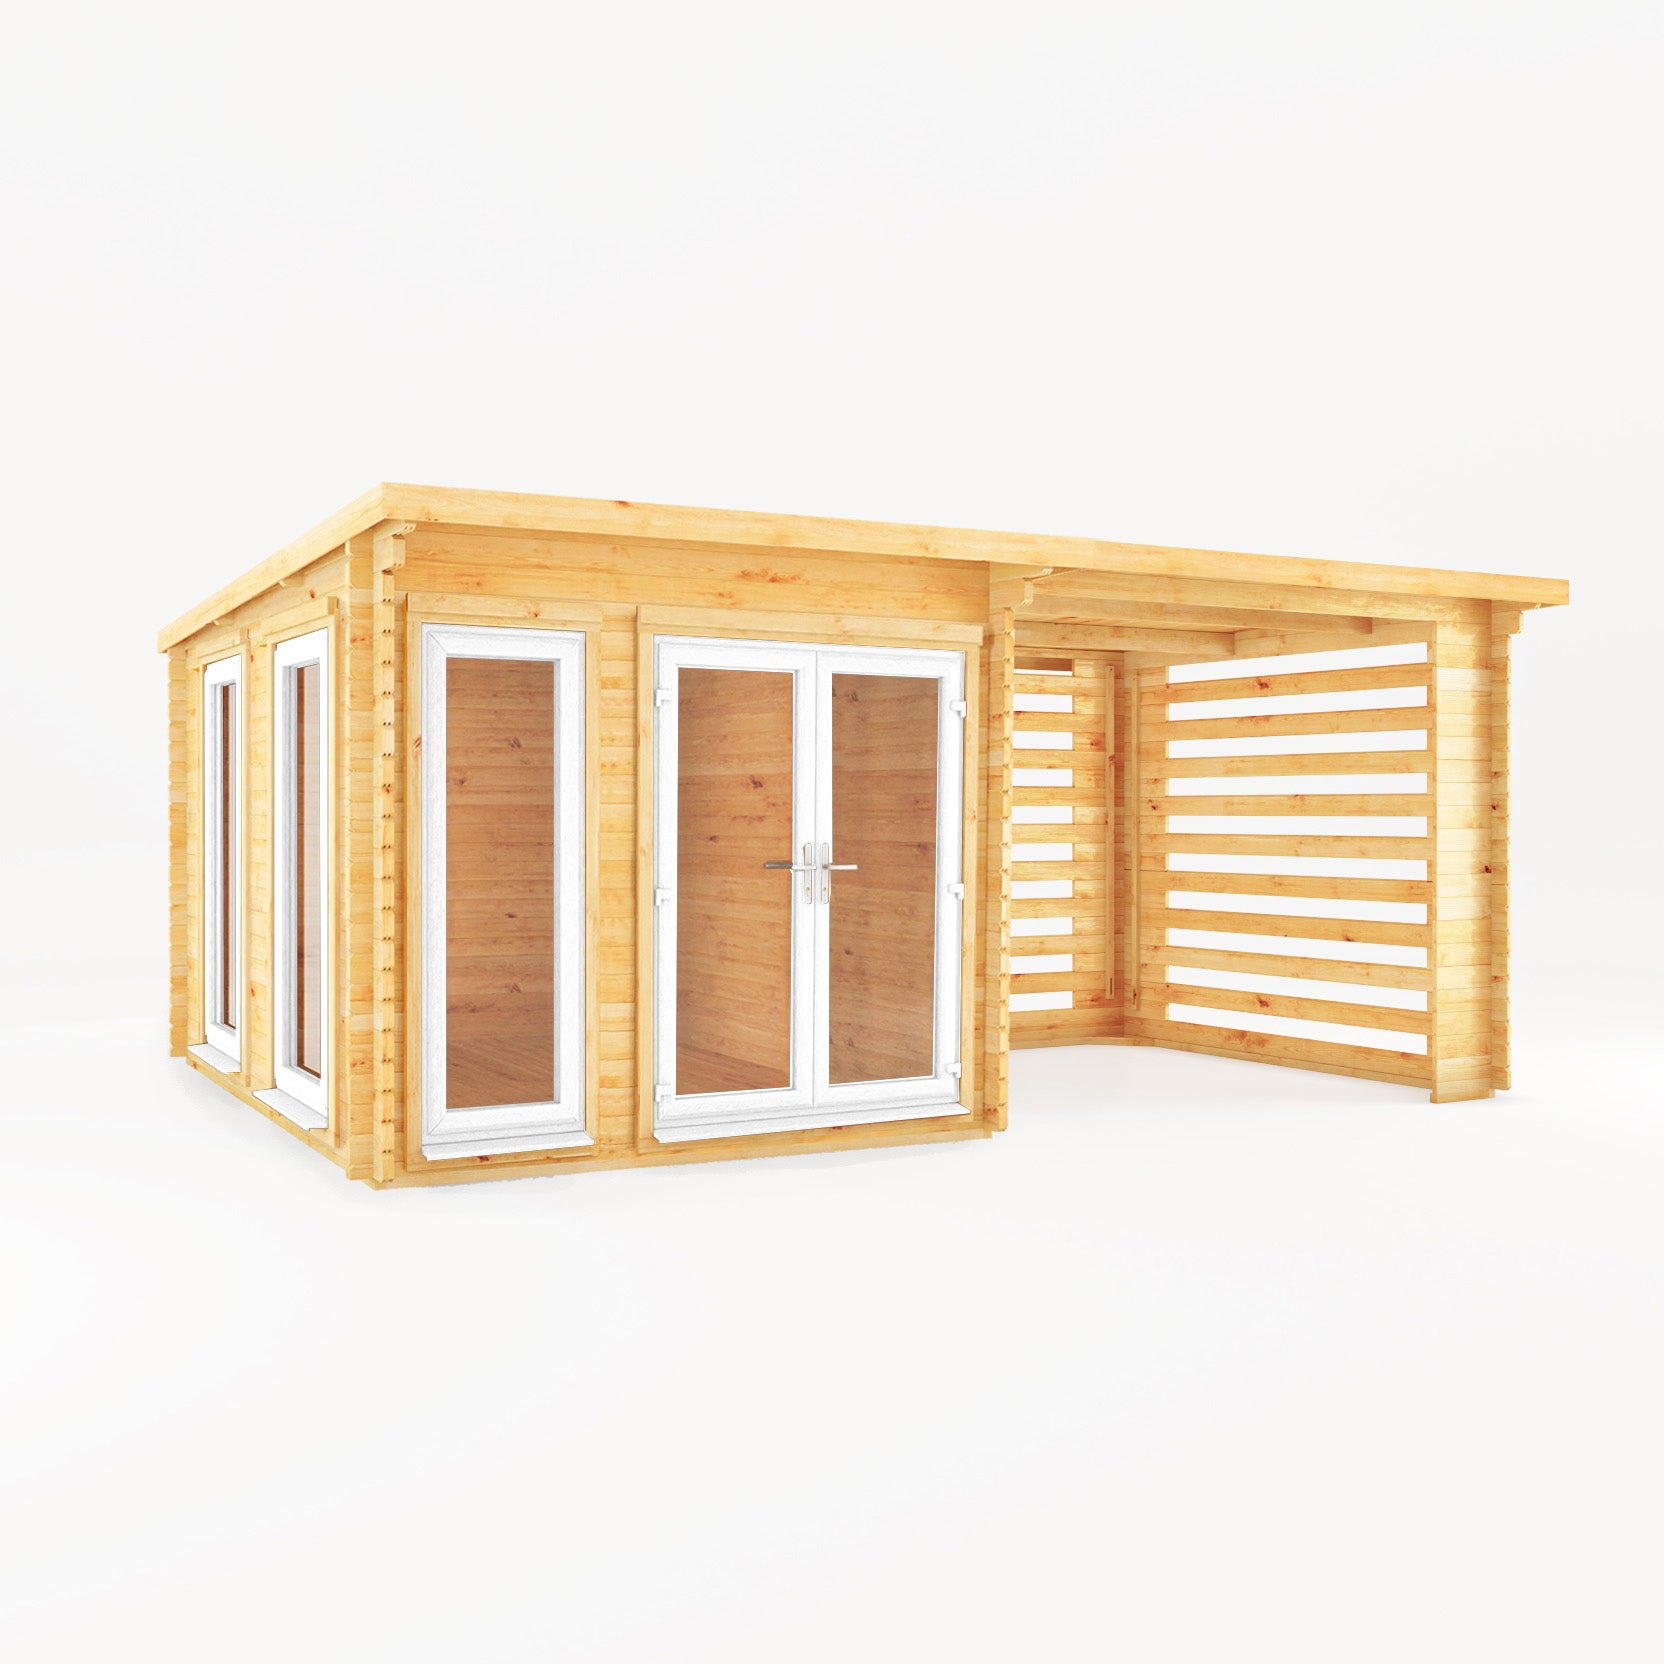 6m x 3m Studio Pent Log Cabin with Slatted Area - UPVC White